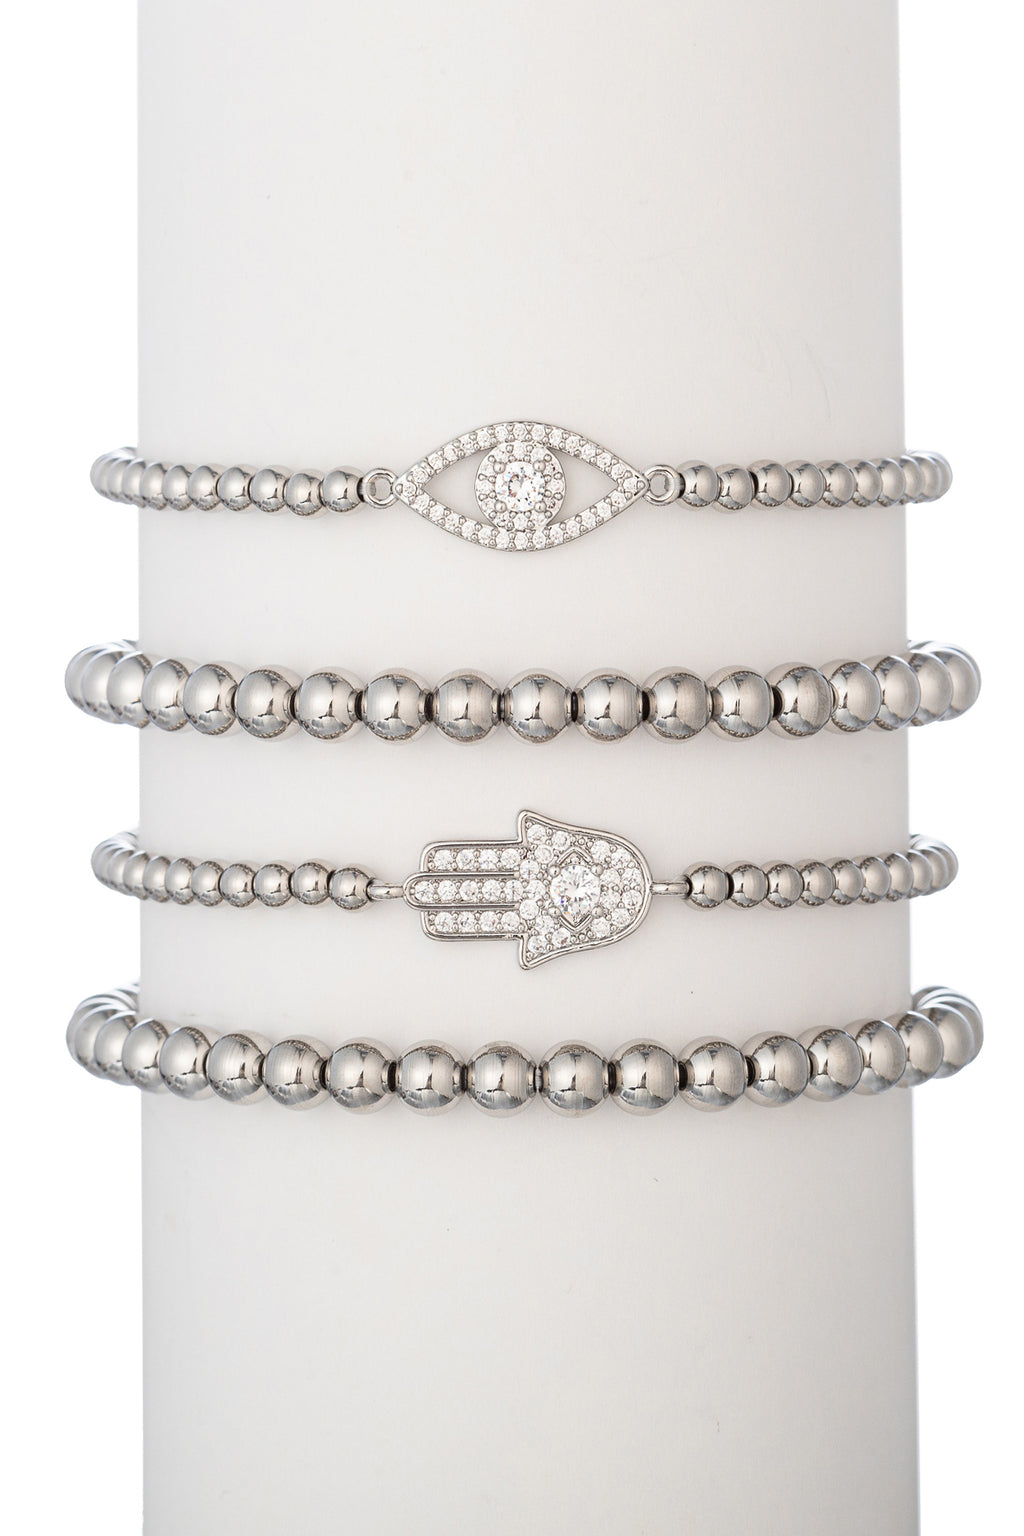 Silver tone titanium beaded bracelet set with CZ crystal evil eye and hamsa hand pendants.